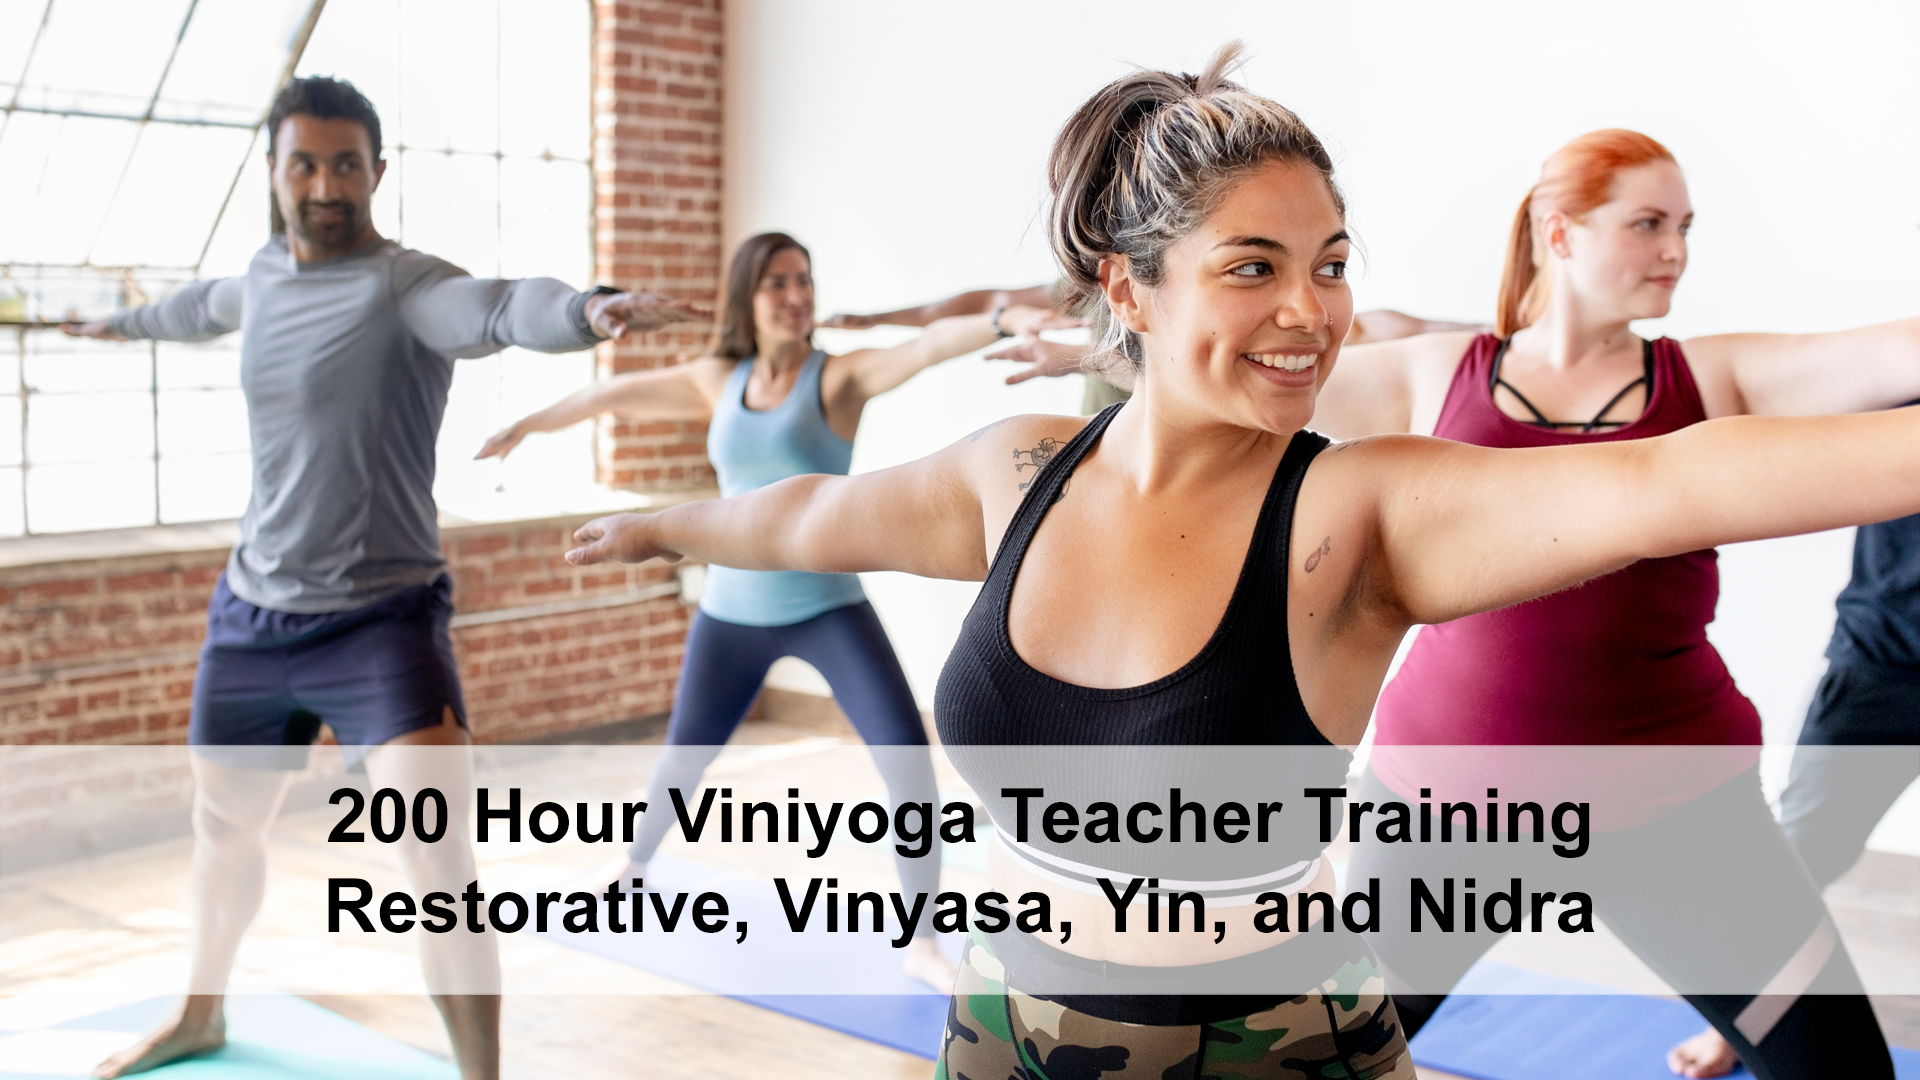 200 Hour Viniyoga Teacher Training